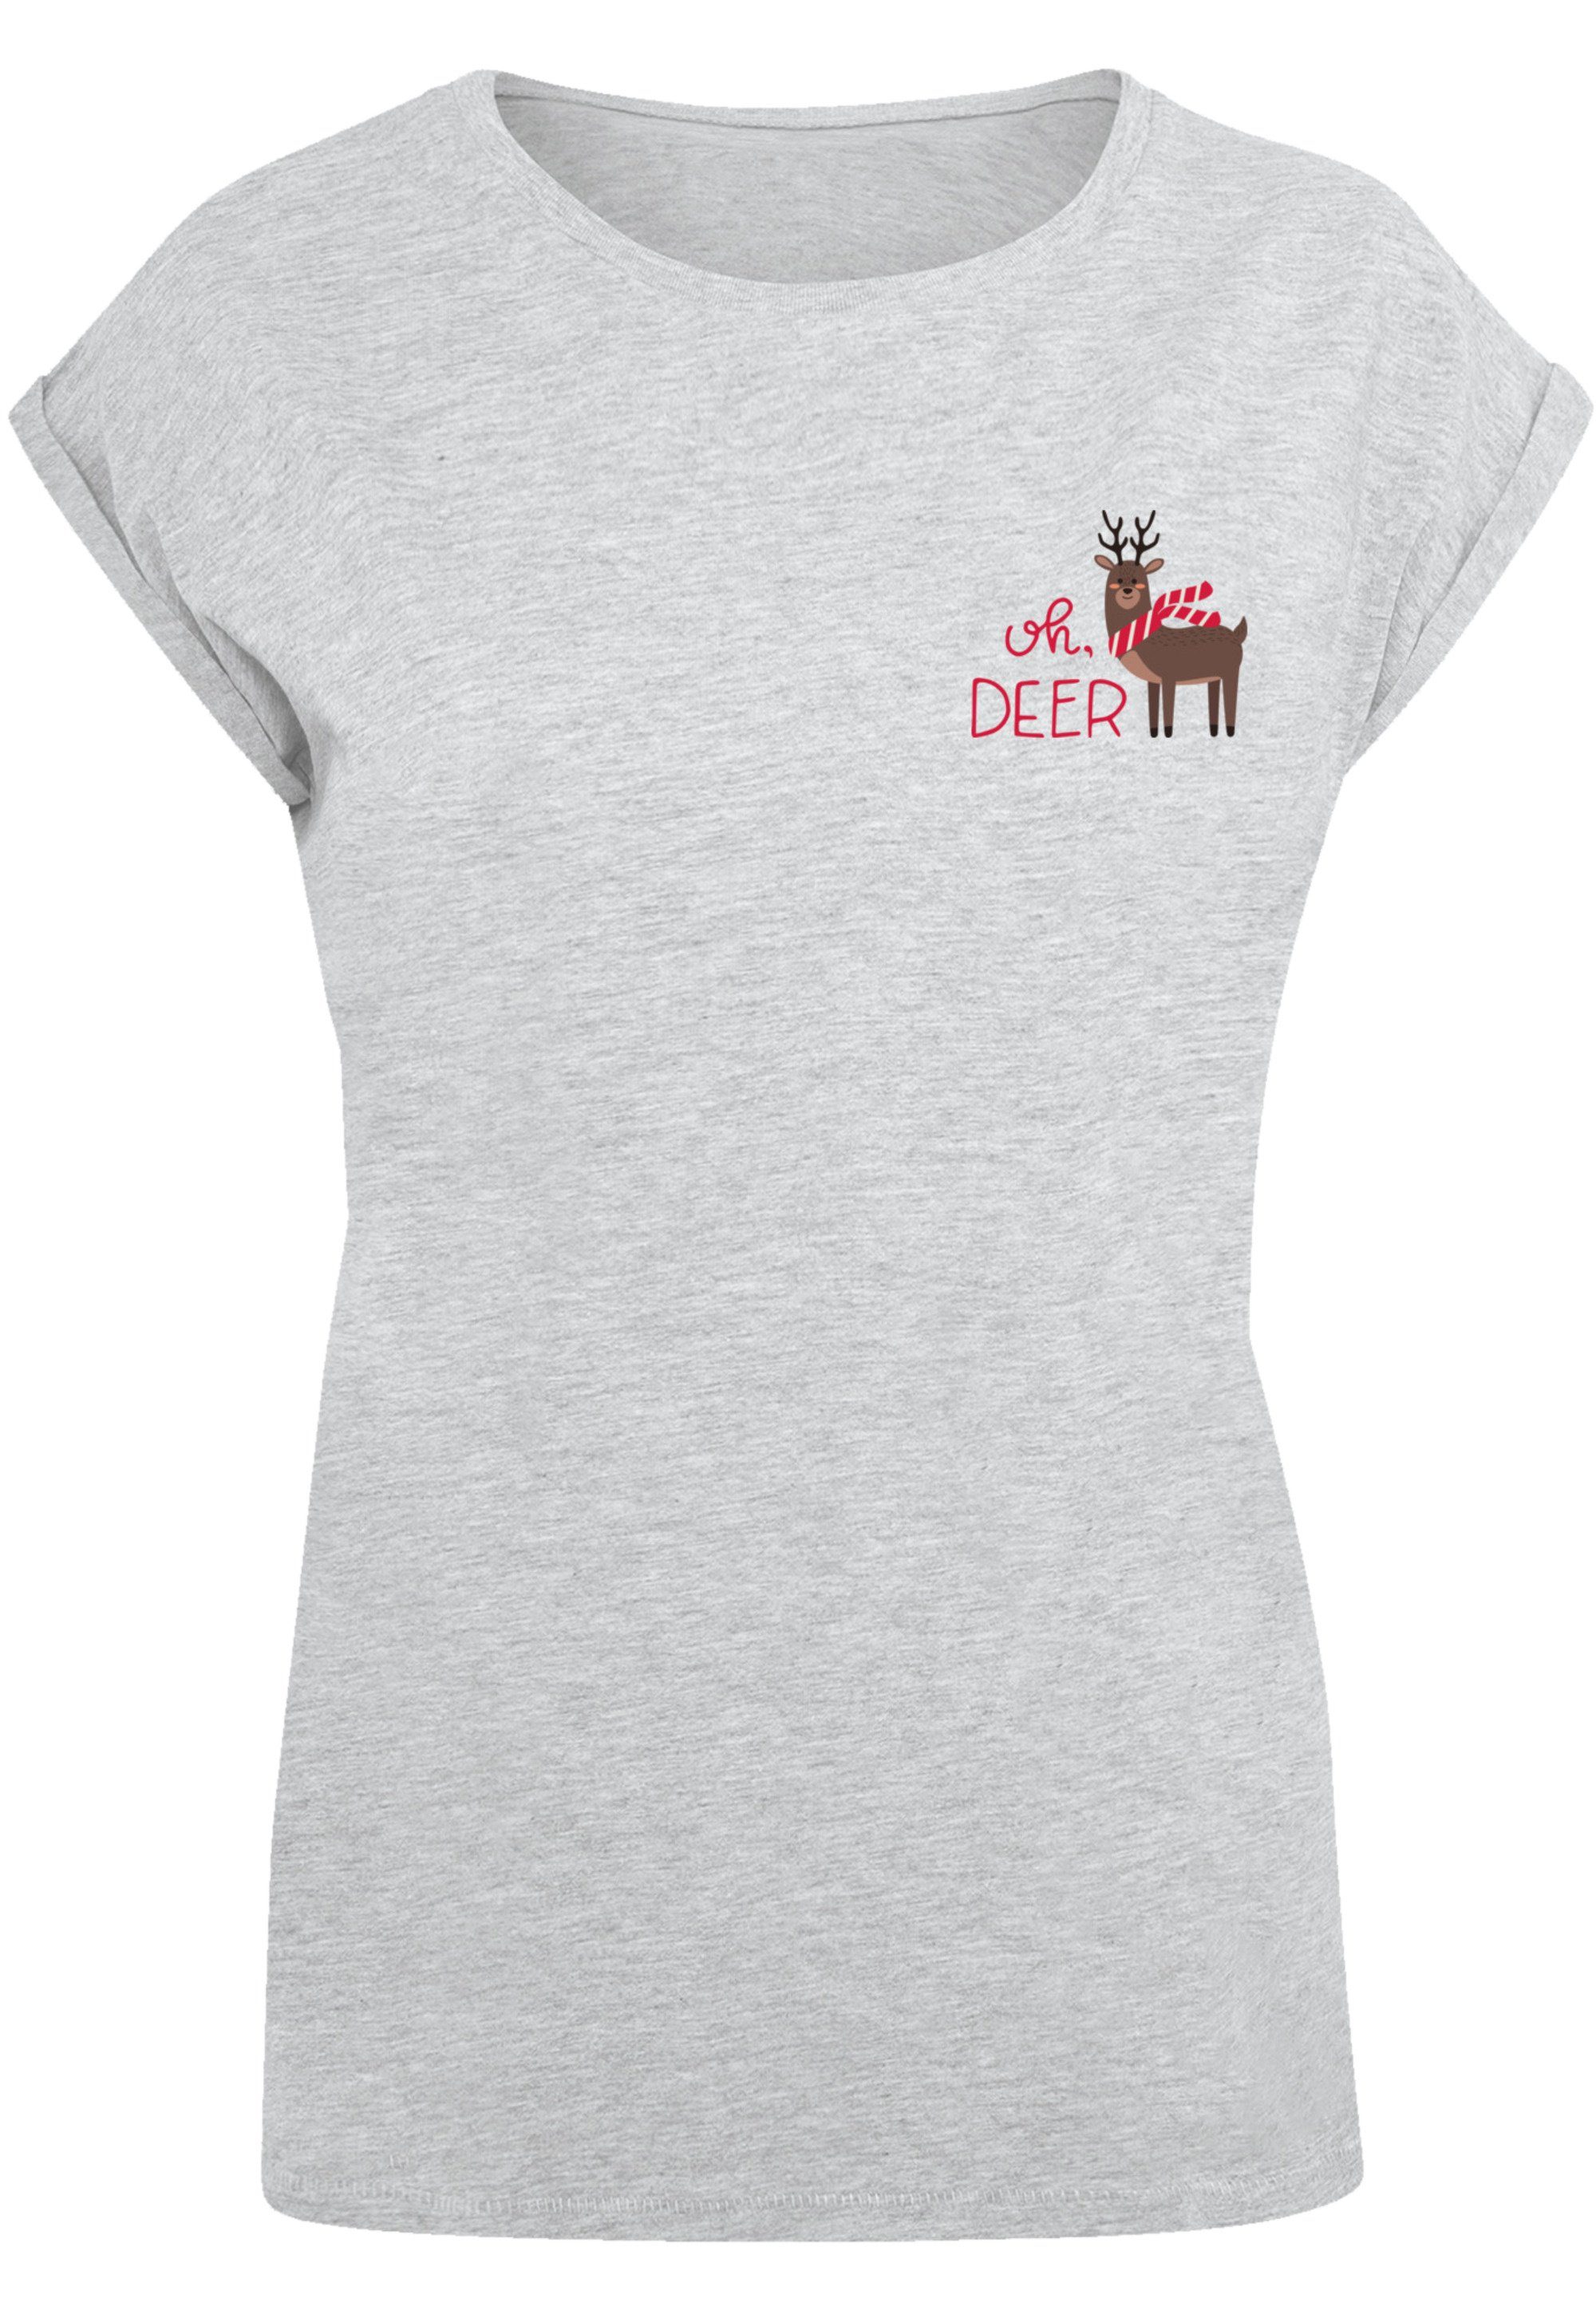 T-Shirt Rock-Musik, Qualität, F4NT4STIC Deer Band Christmas Premium heather grey